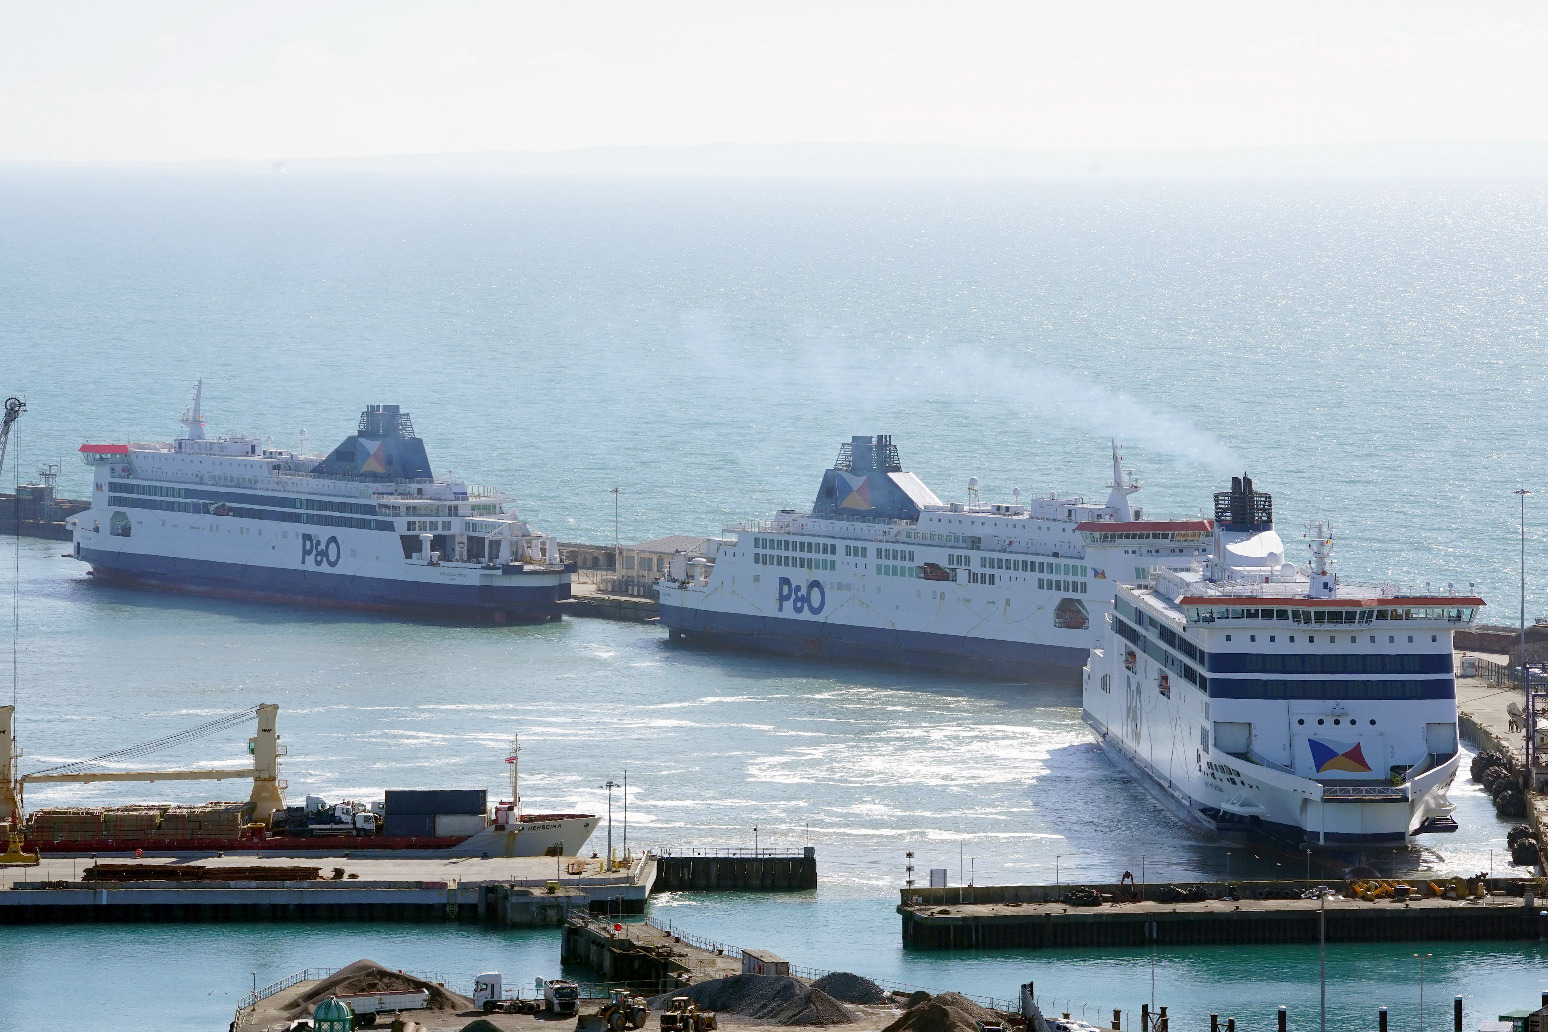 PO Ferries suspends sailings but denies liquidation reports